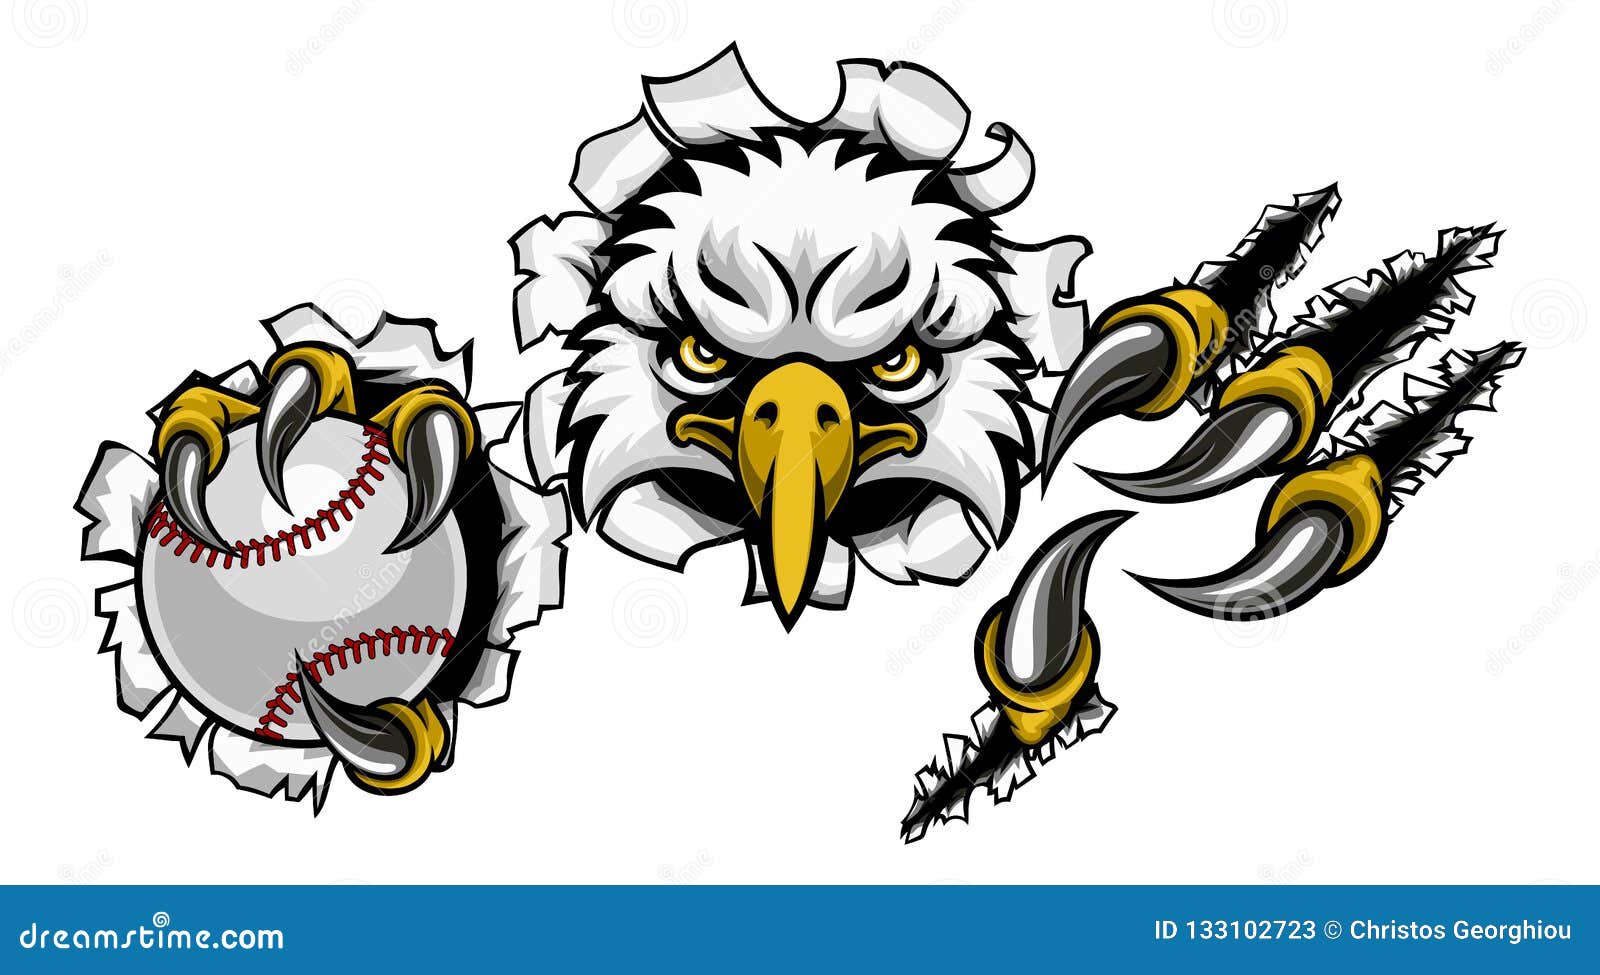 eagle baseball cartoon mascot tearing background